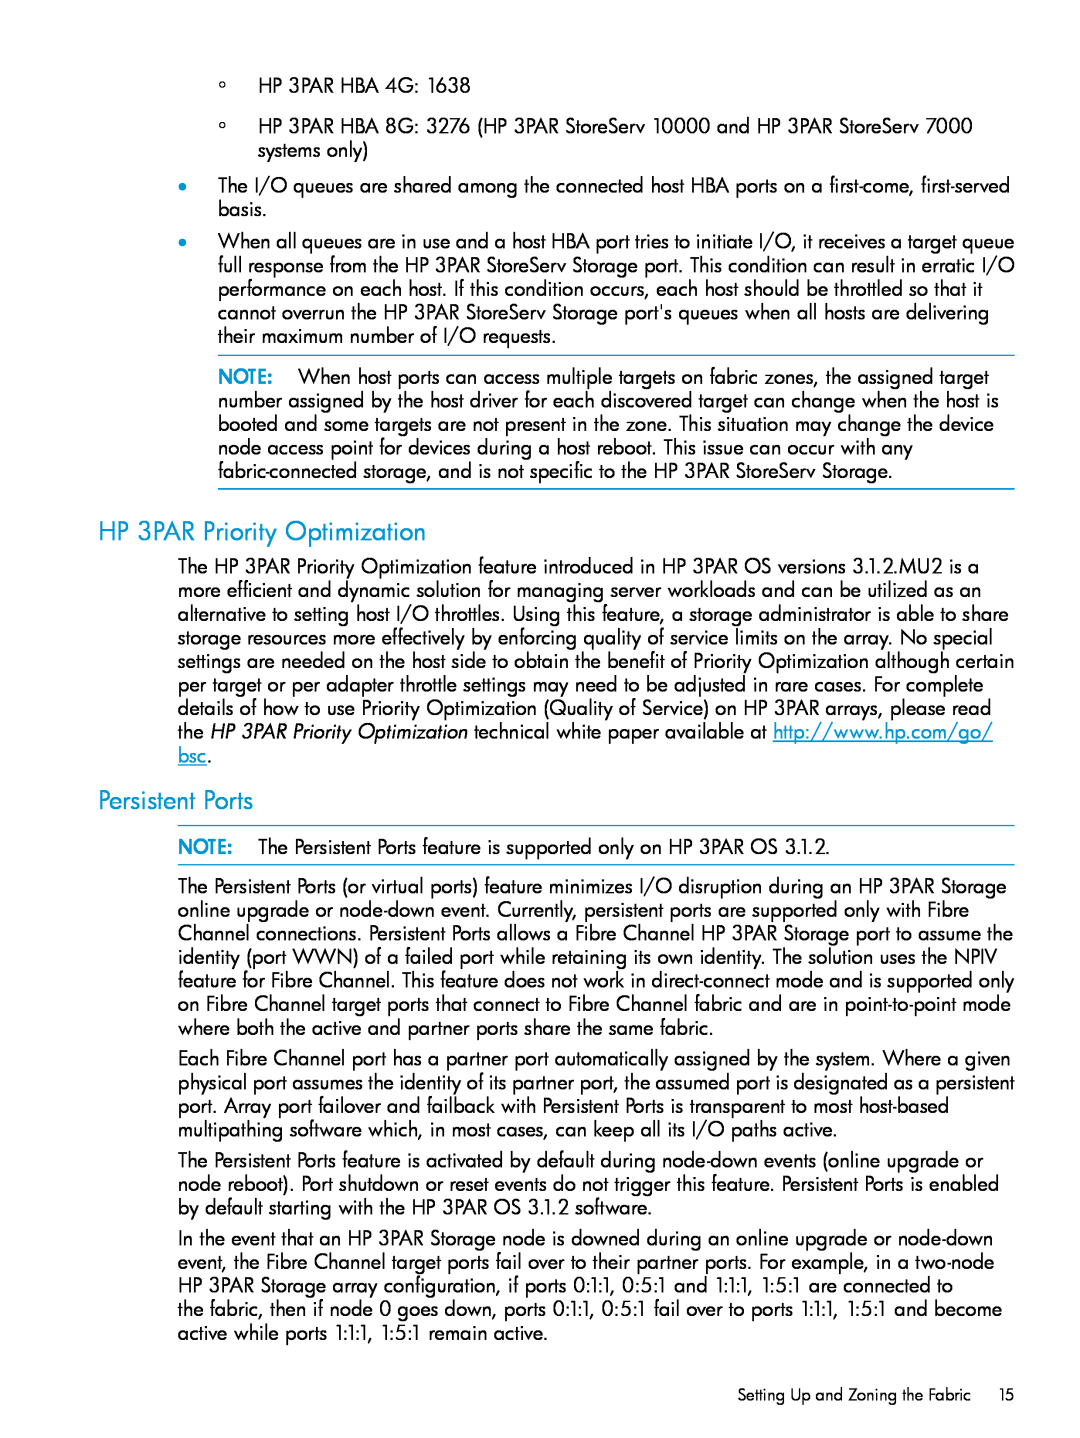 HP QR516B manual HP 3PAR Priority Optimization, Persistent Ports 